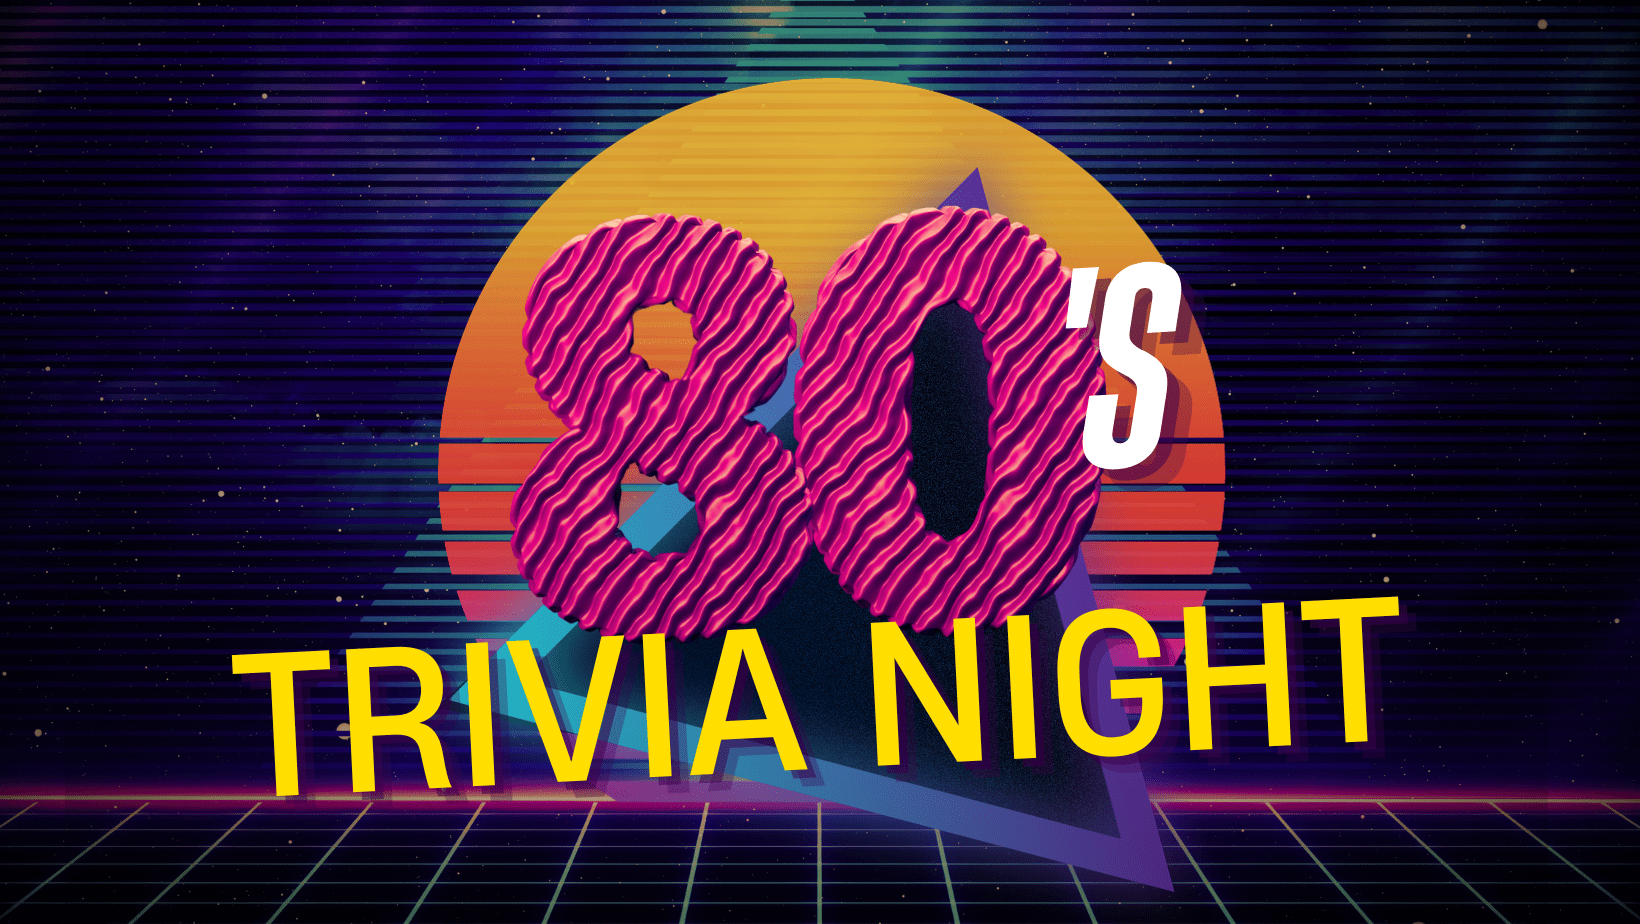 80s Trivia Night